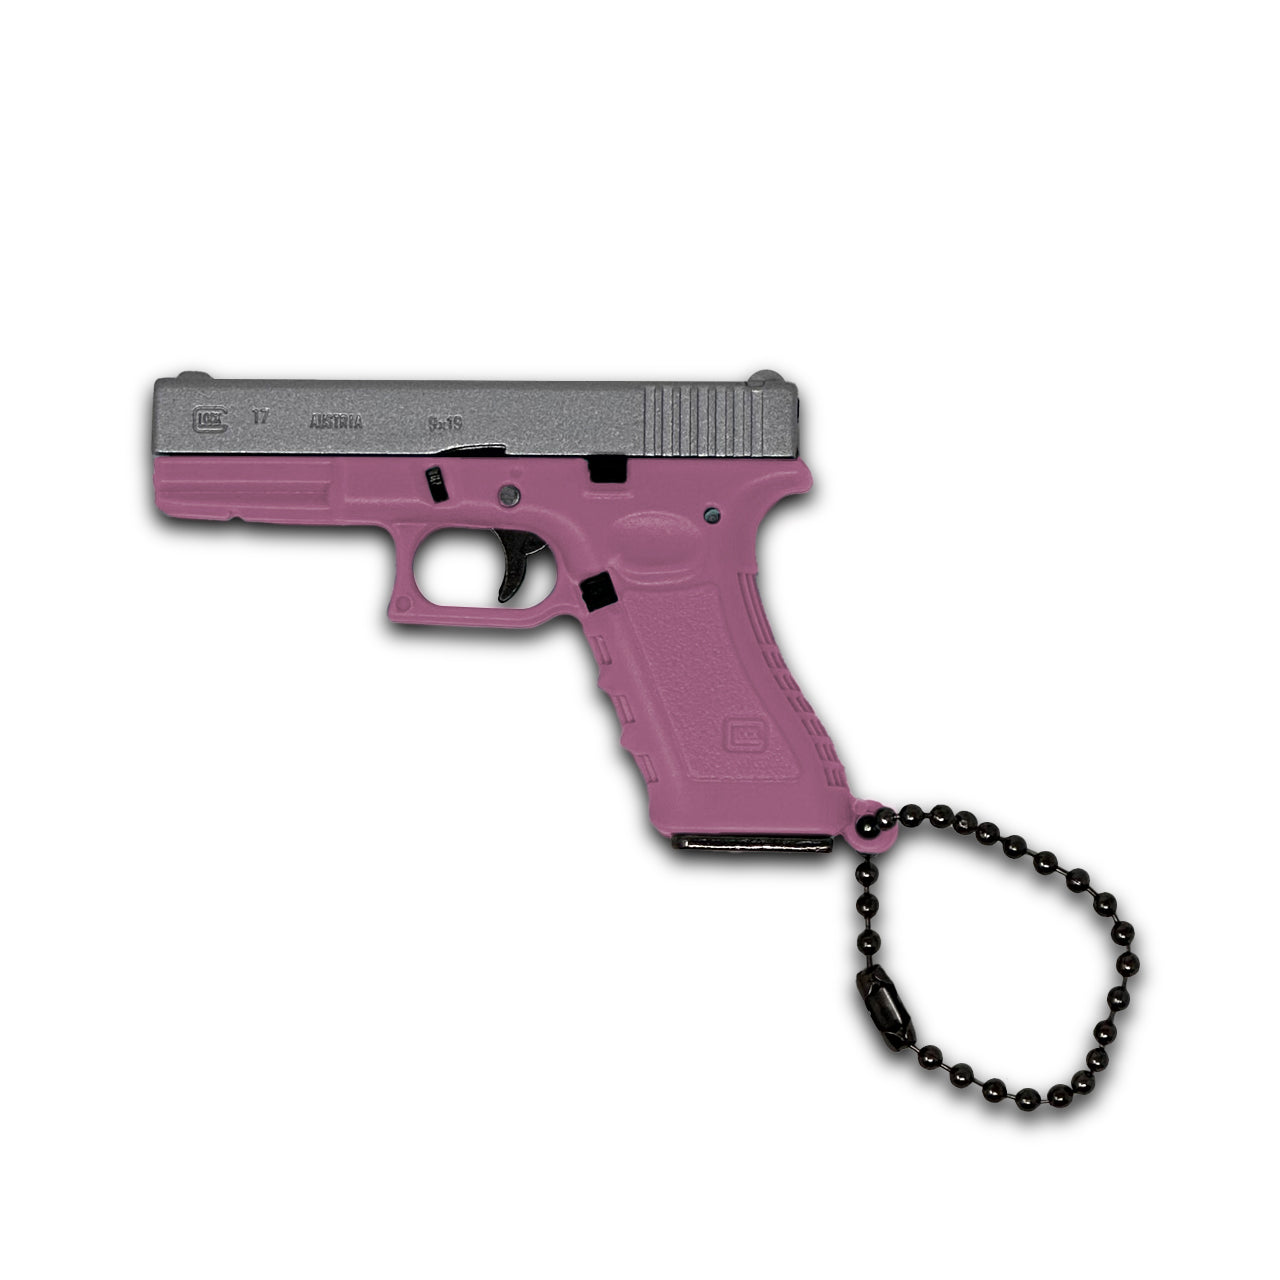 Pew Pew Keychain - Pink/Silver